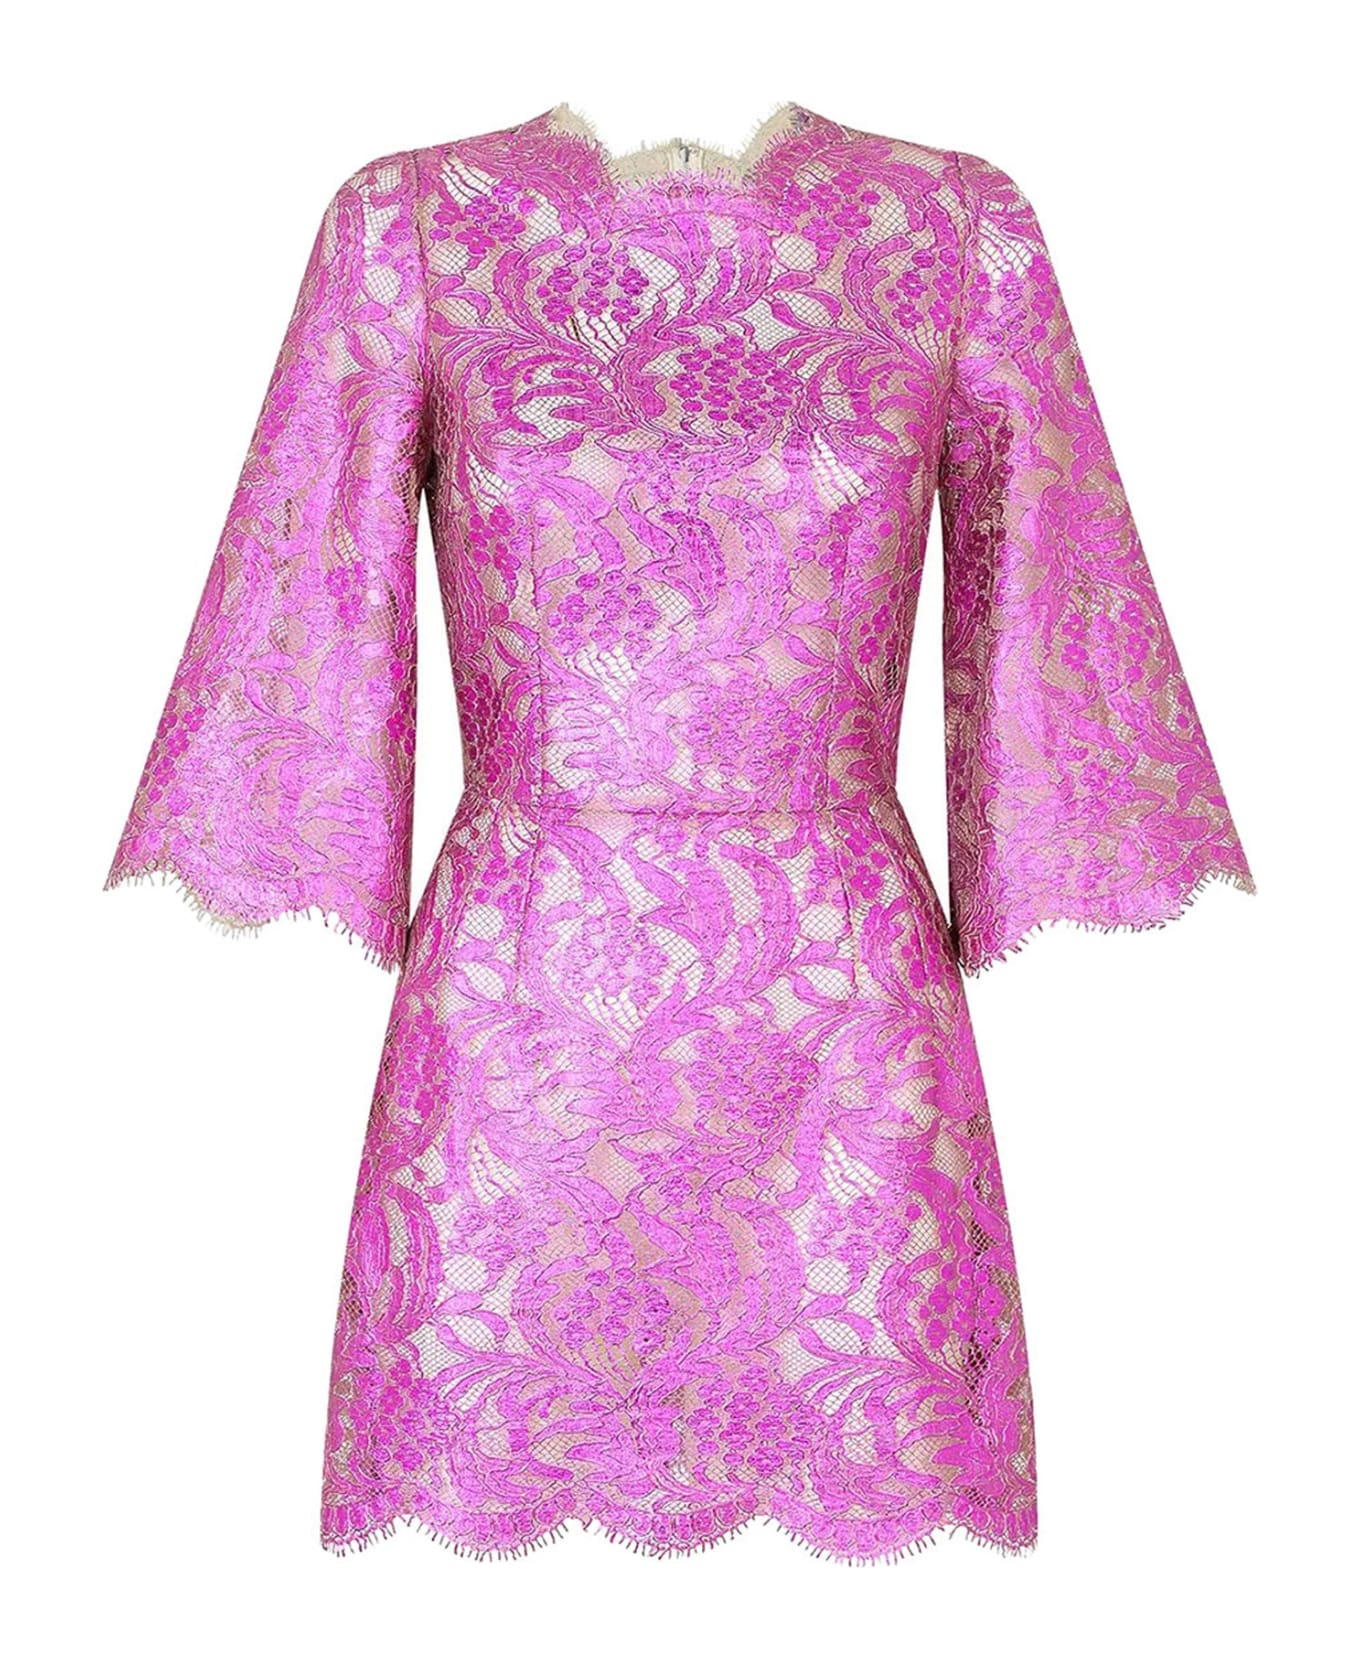 Dolce biker & Gabbana Floral Lace Dress - Pink